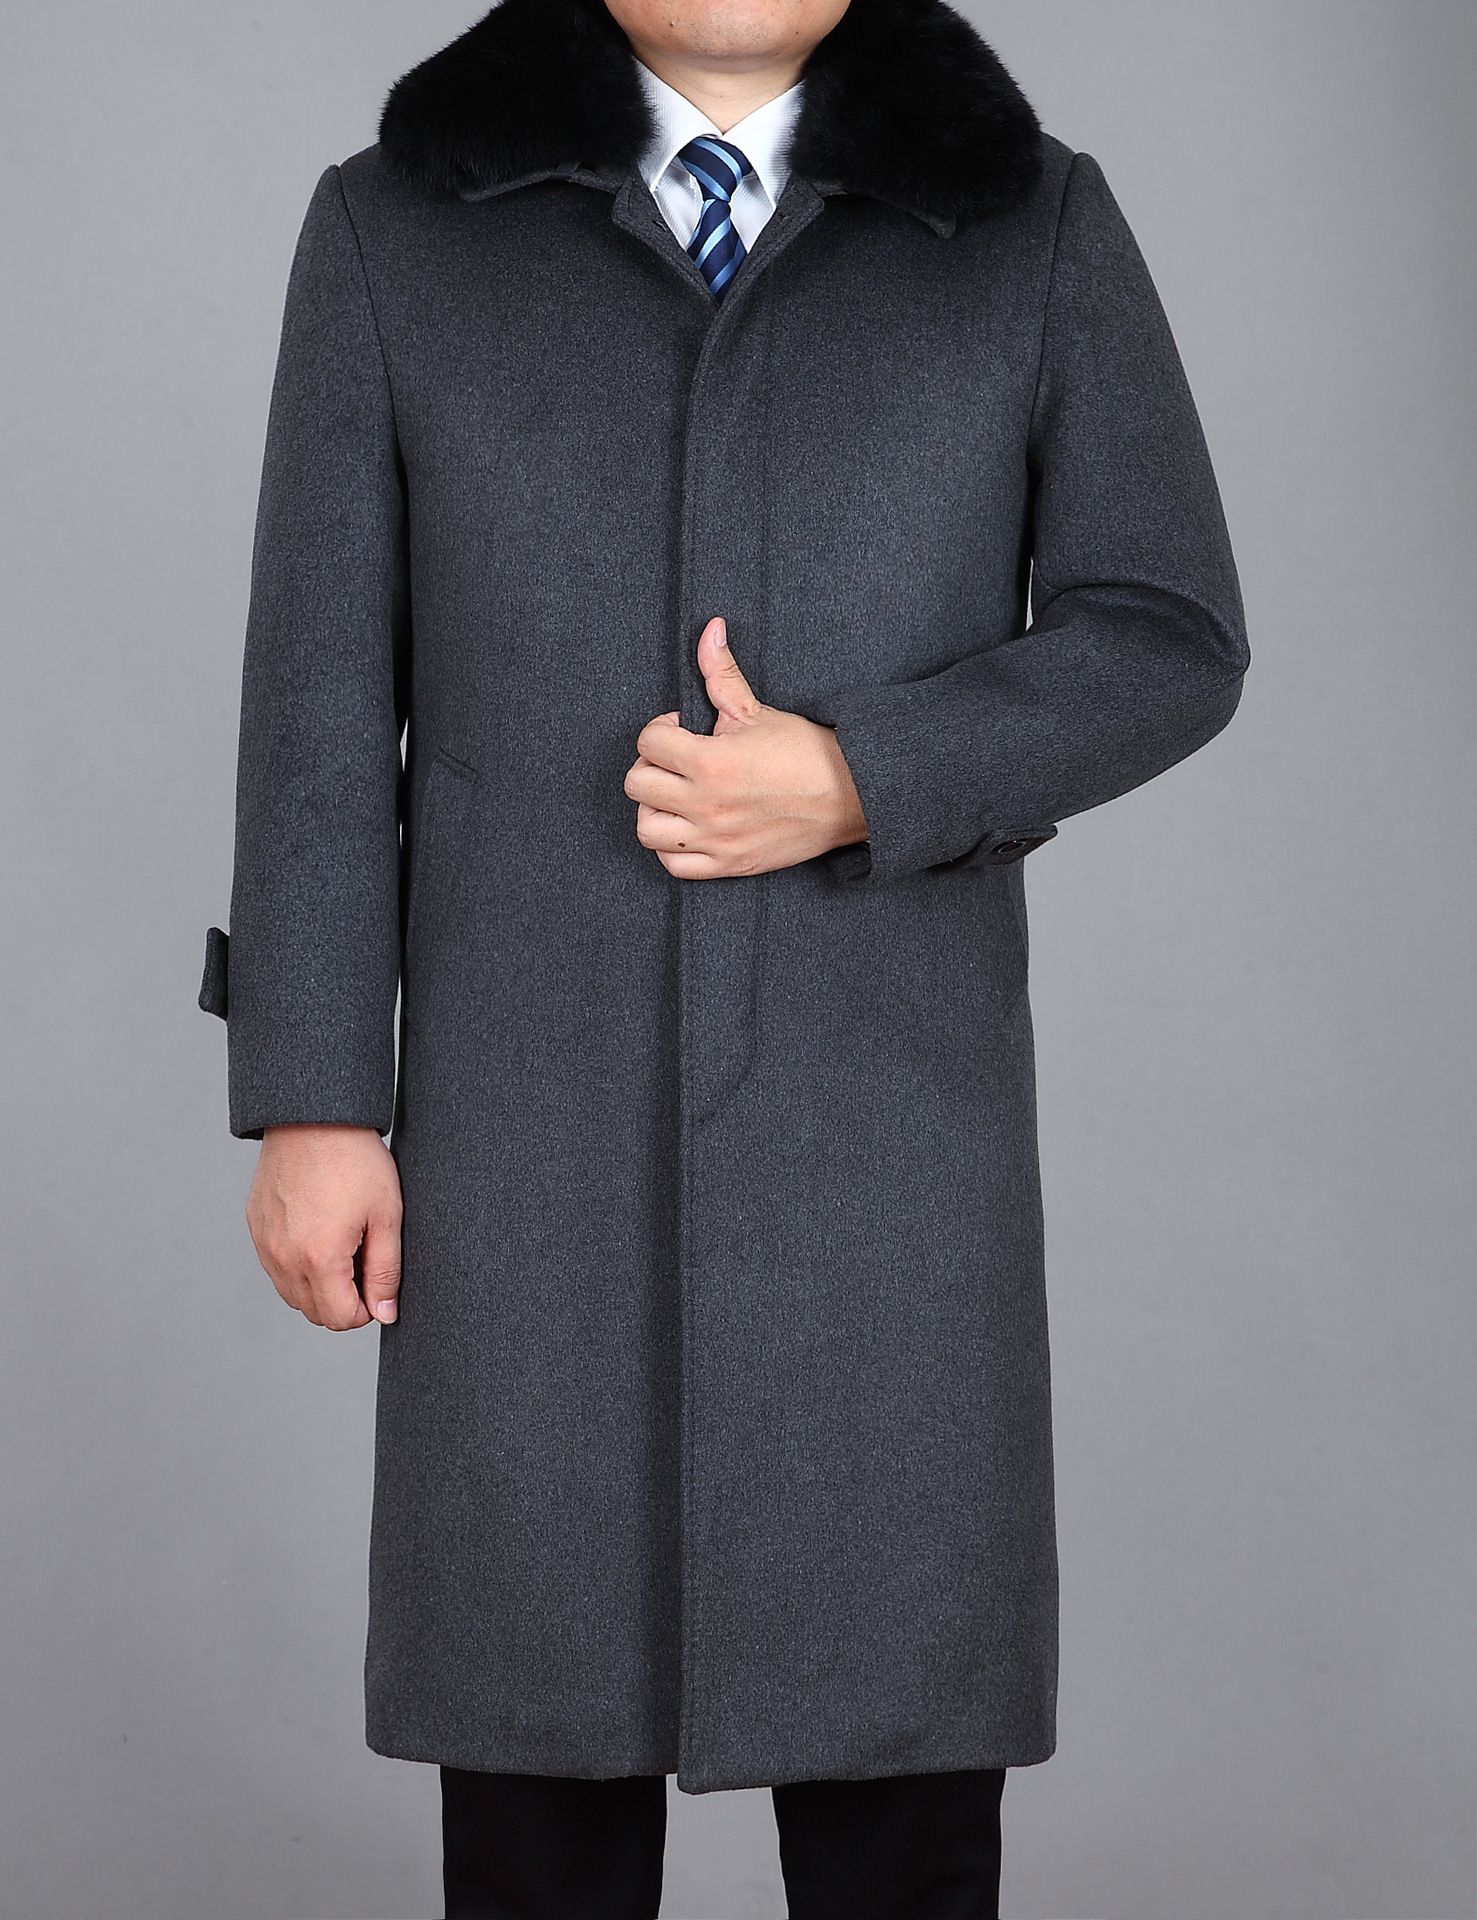 Chip Chaleco Distribución Abrigos y chaquetas de lana para hombre Abrigo de cachemira para hombre  Chaqueta de traje largo